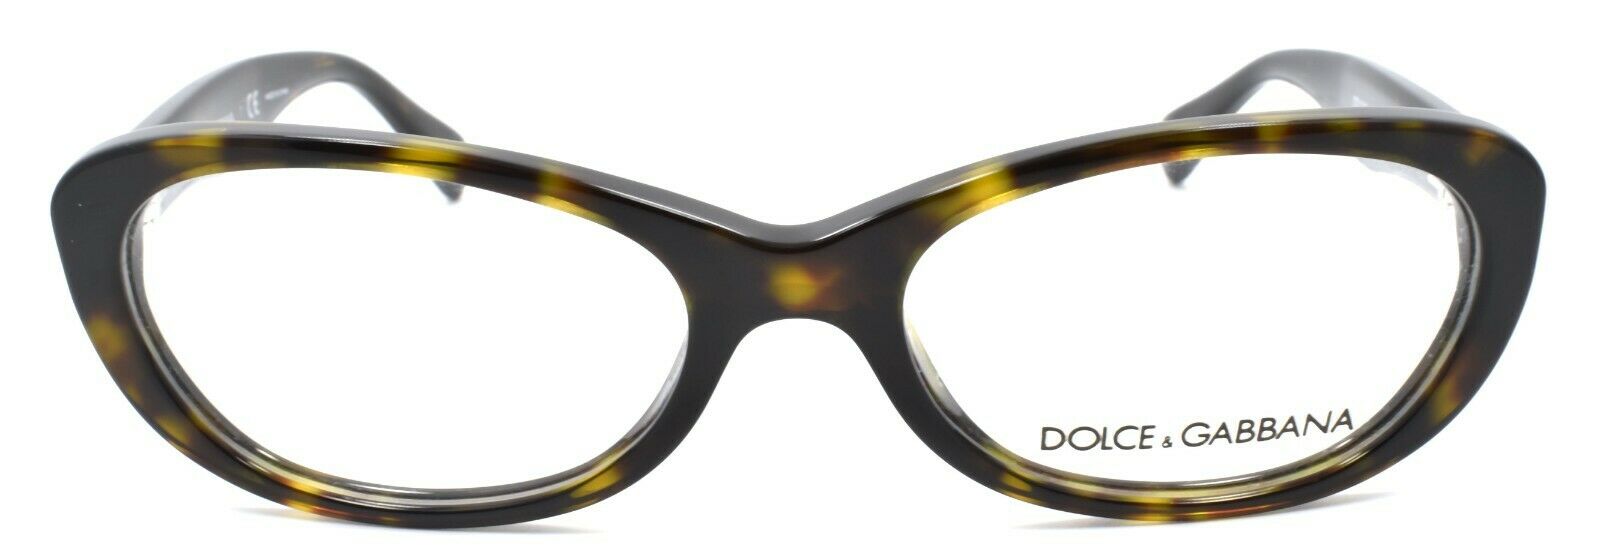 2-Dolce & Gabbana DD1248 502 Women's Eyeglasses Frames 51-17-135 Dark Havana-679420525150-IKSpecs